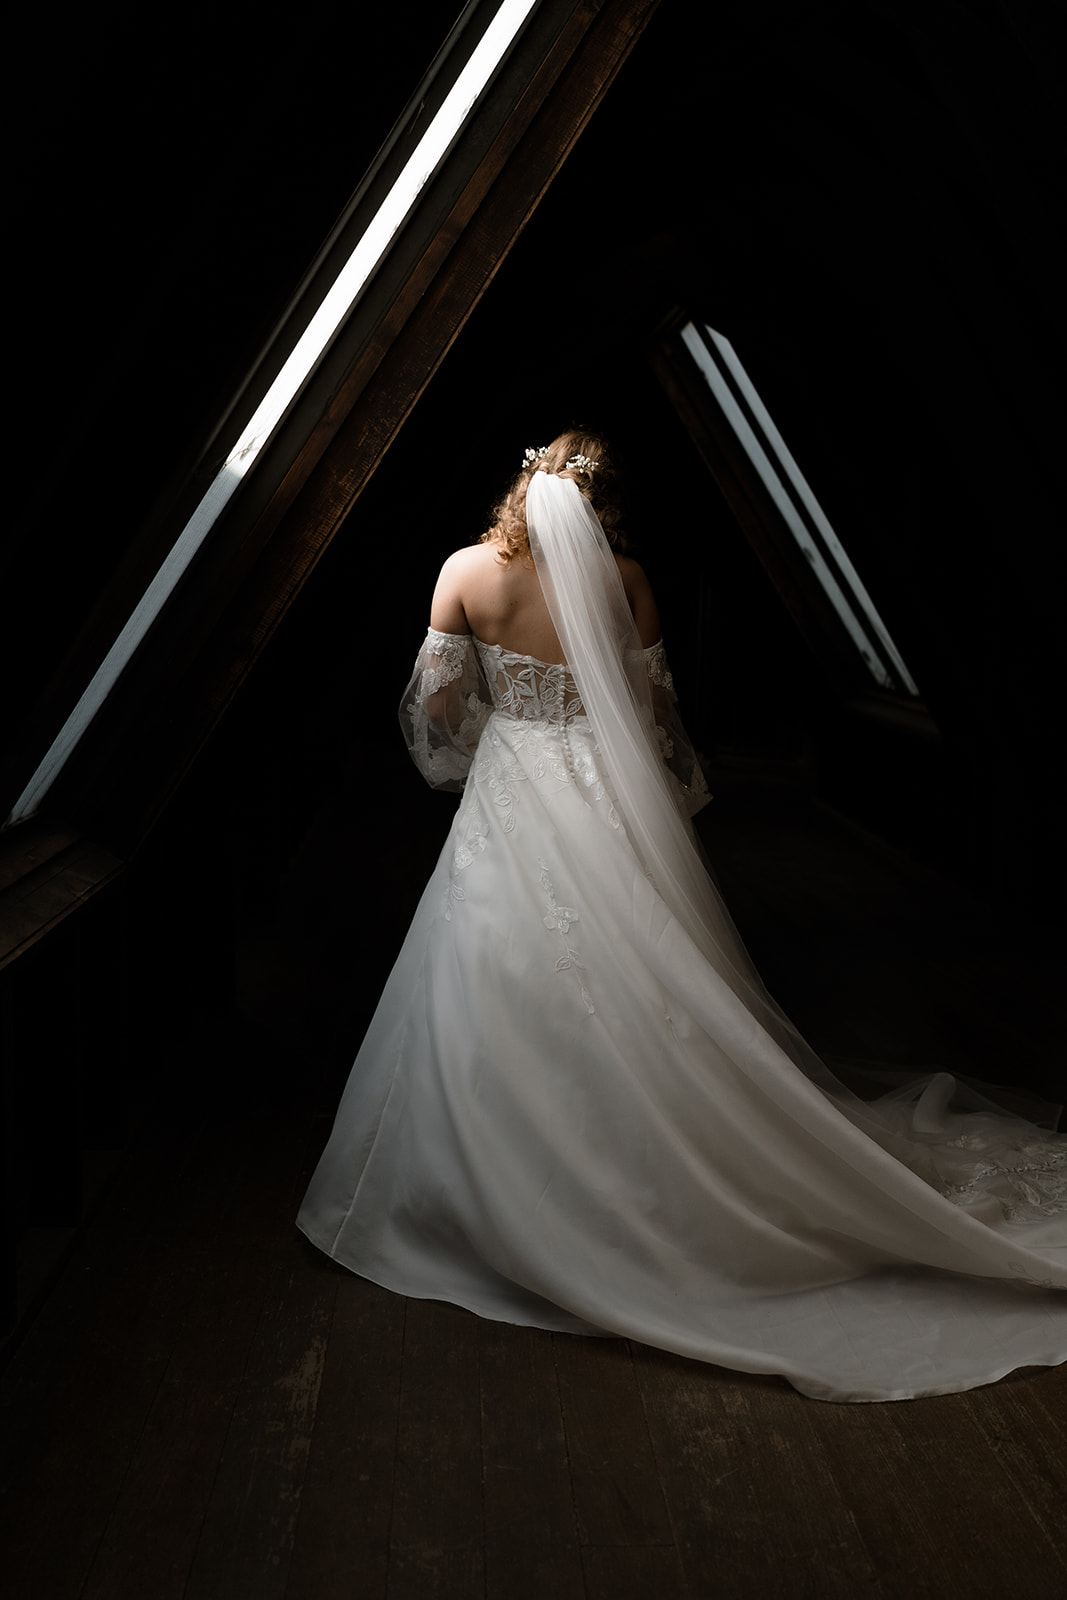 Montsalvat wedding photographer captures bride's stunning gown in soft light